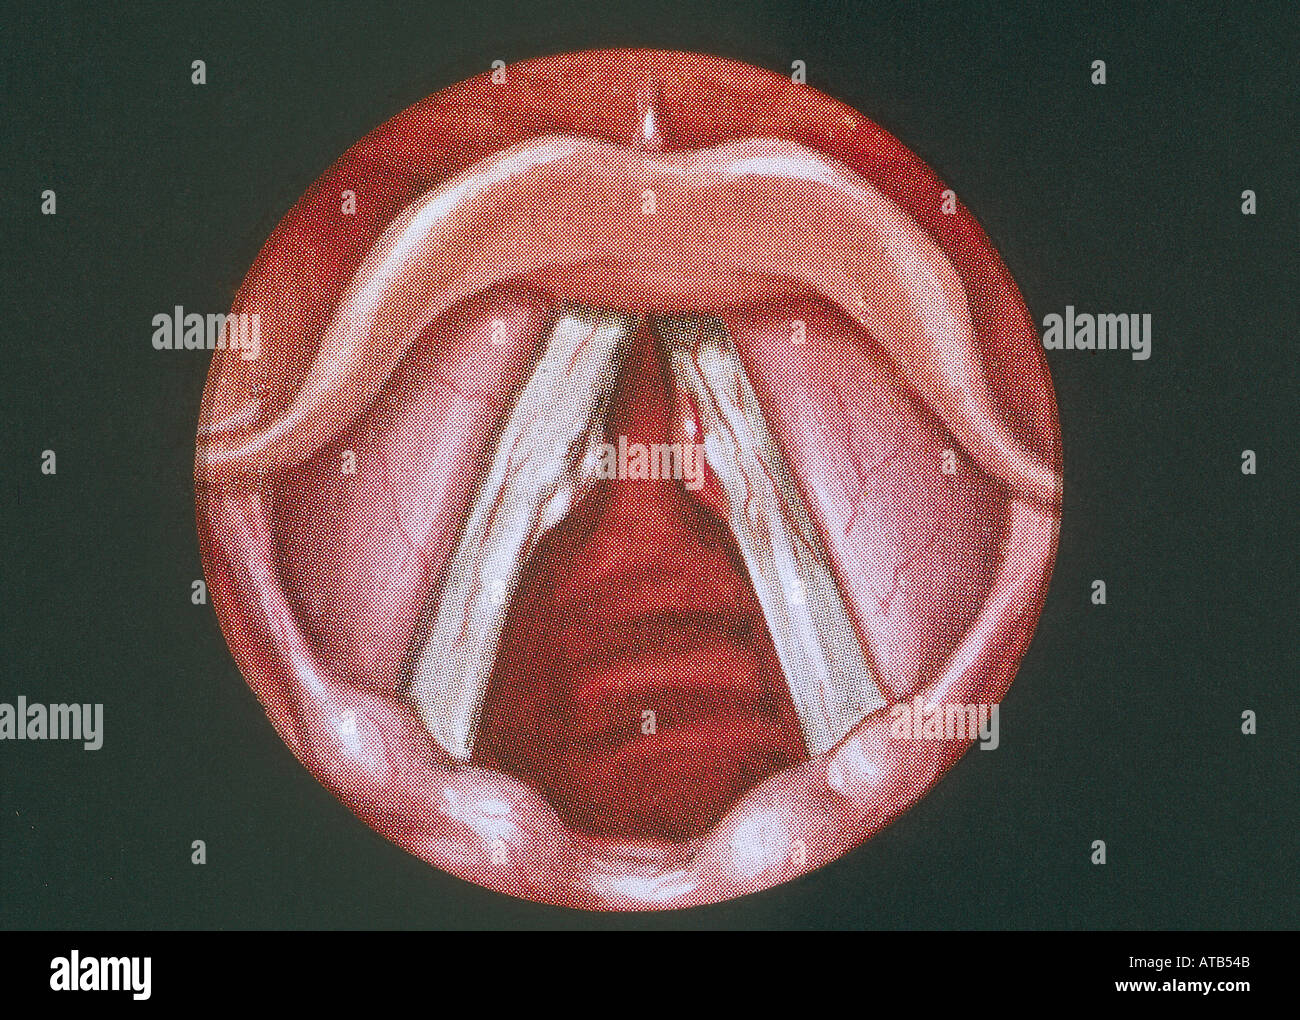 Diagram vocal cord nodules Stock Photo